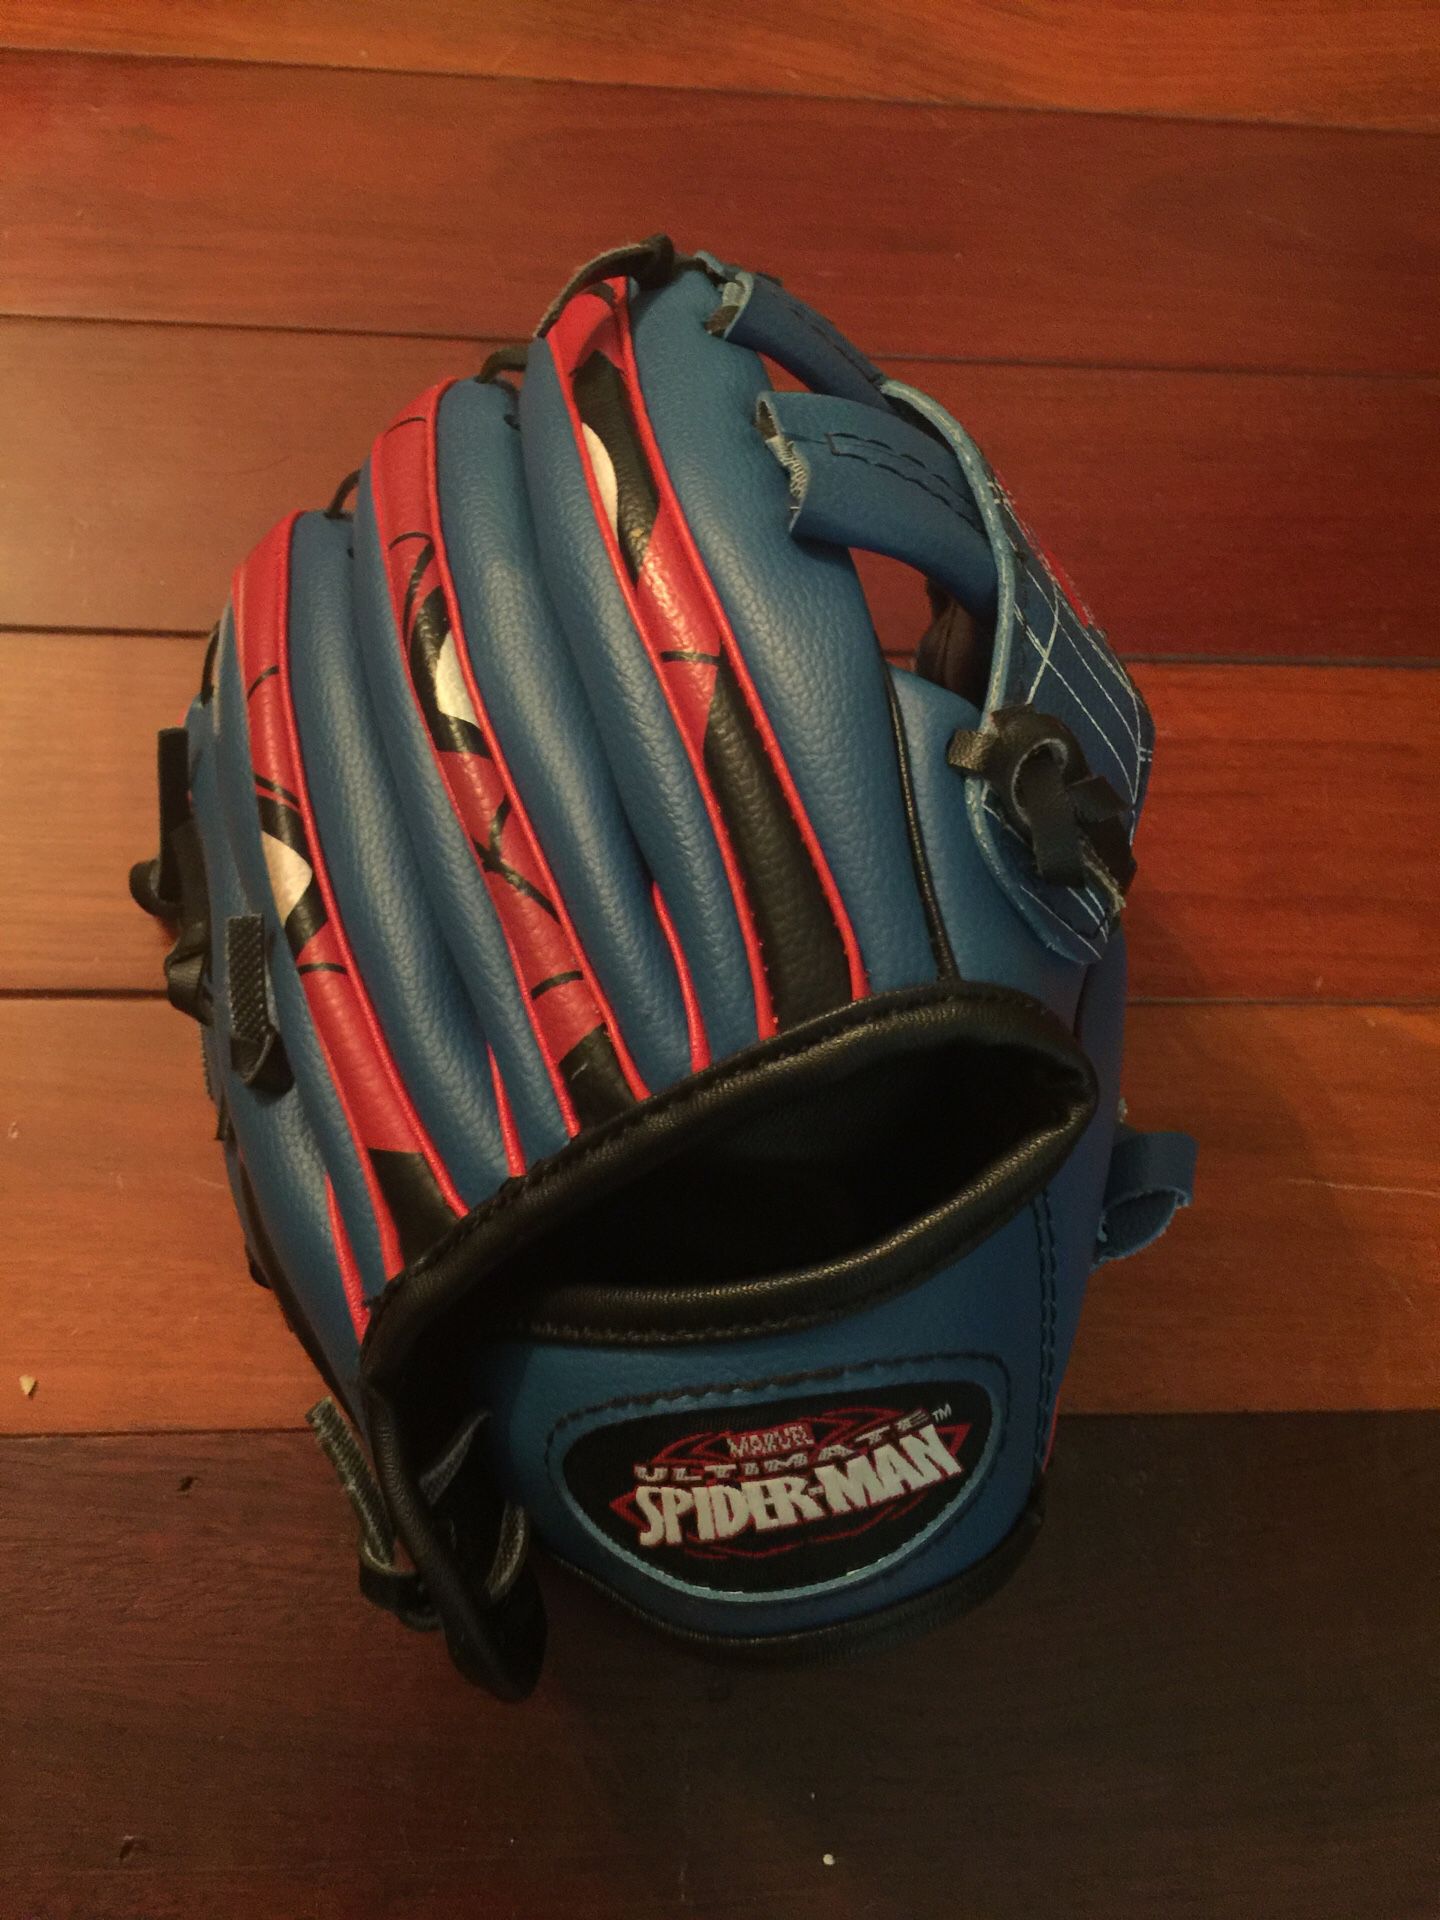 Spider man baseball glove (kids size)